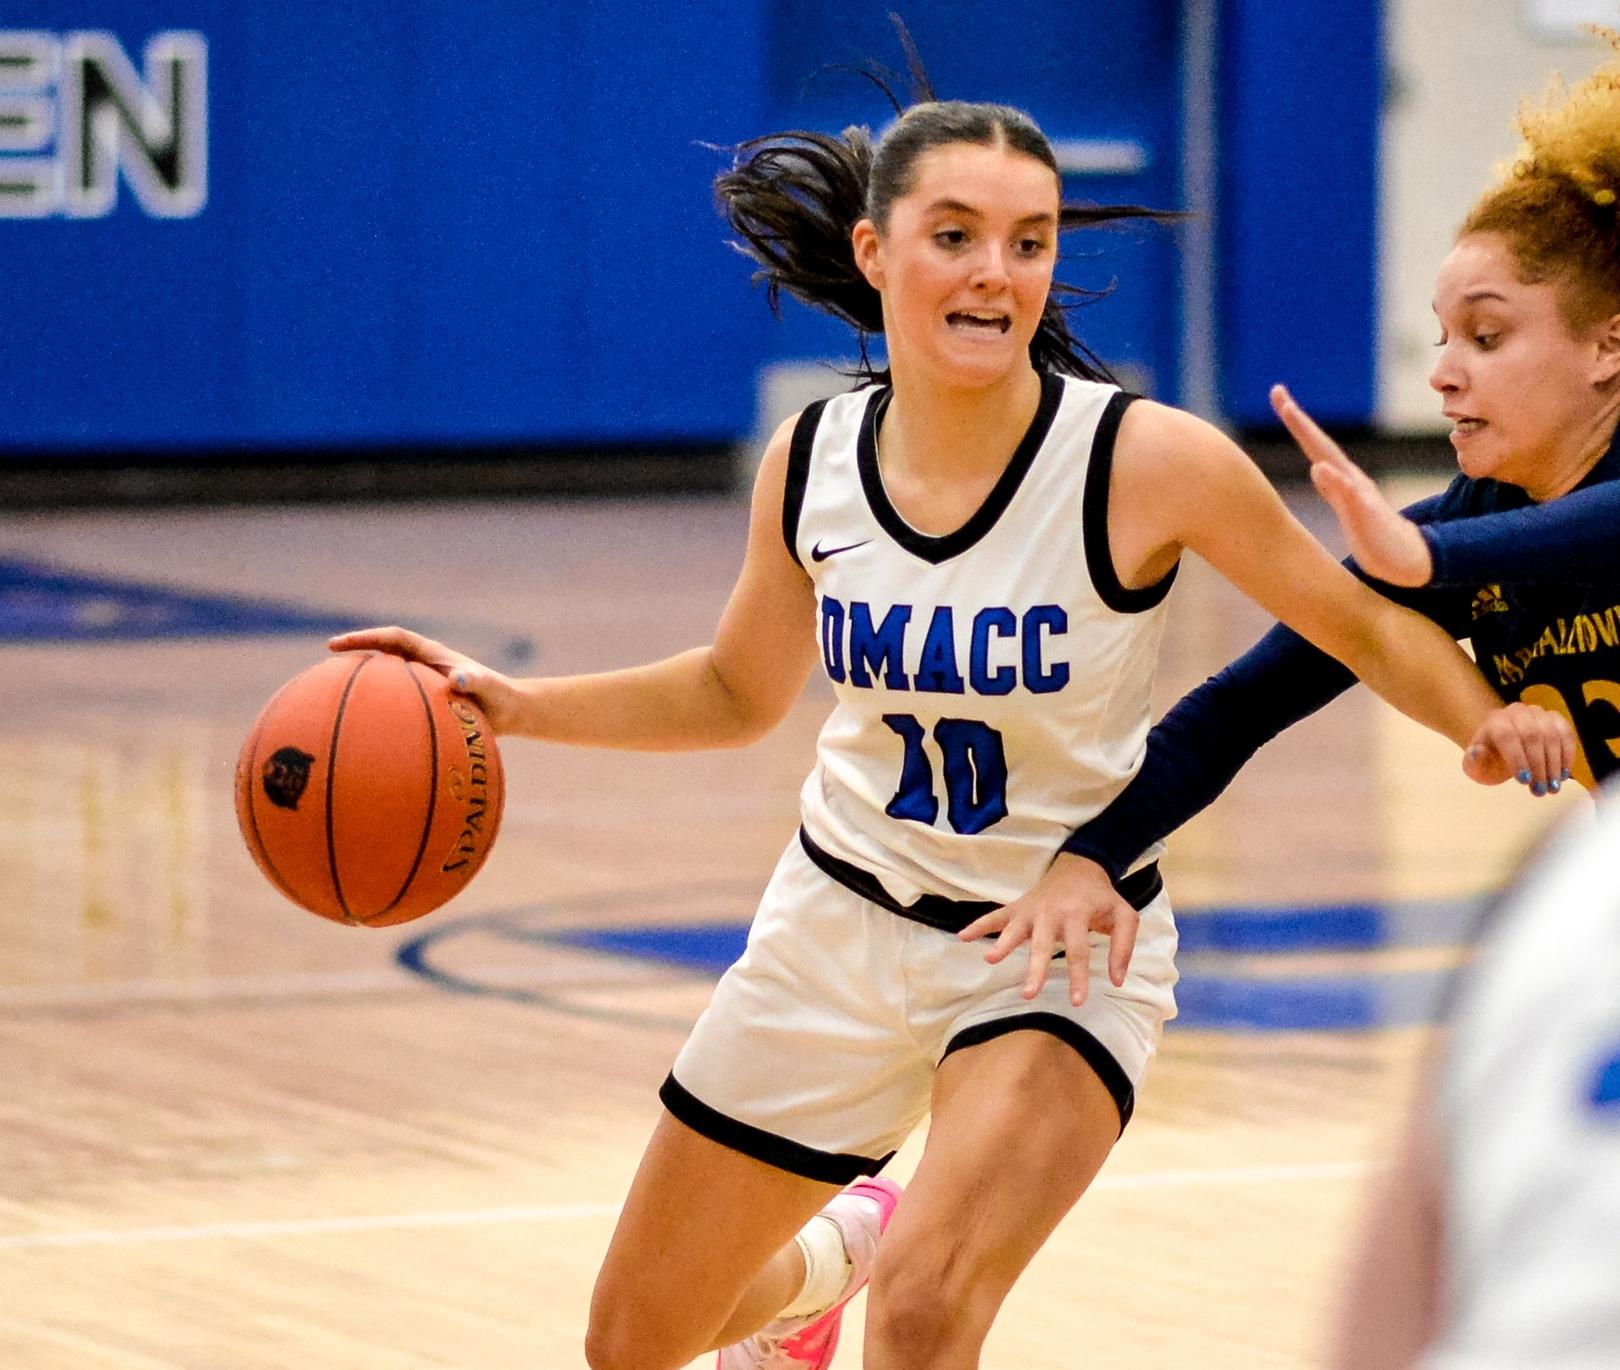 Ainley leads DMACC women's basketball past MCC, 82-58